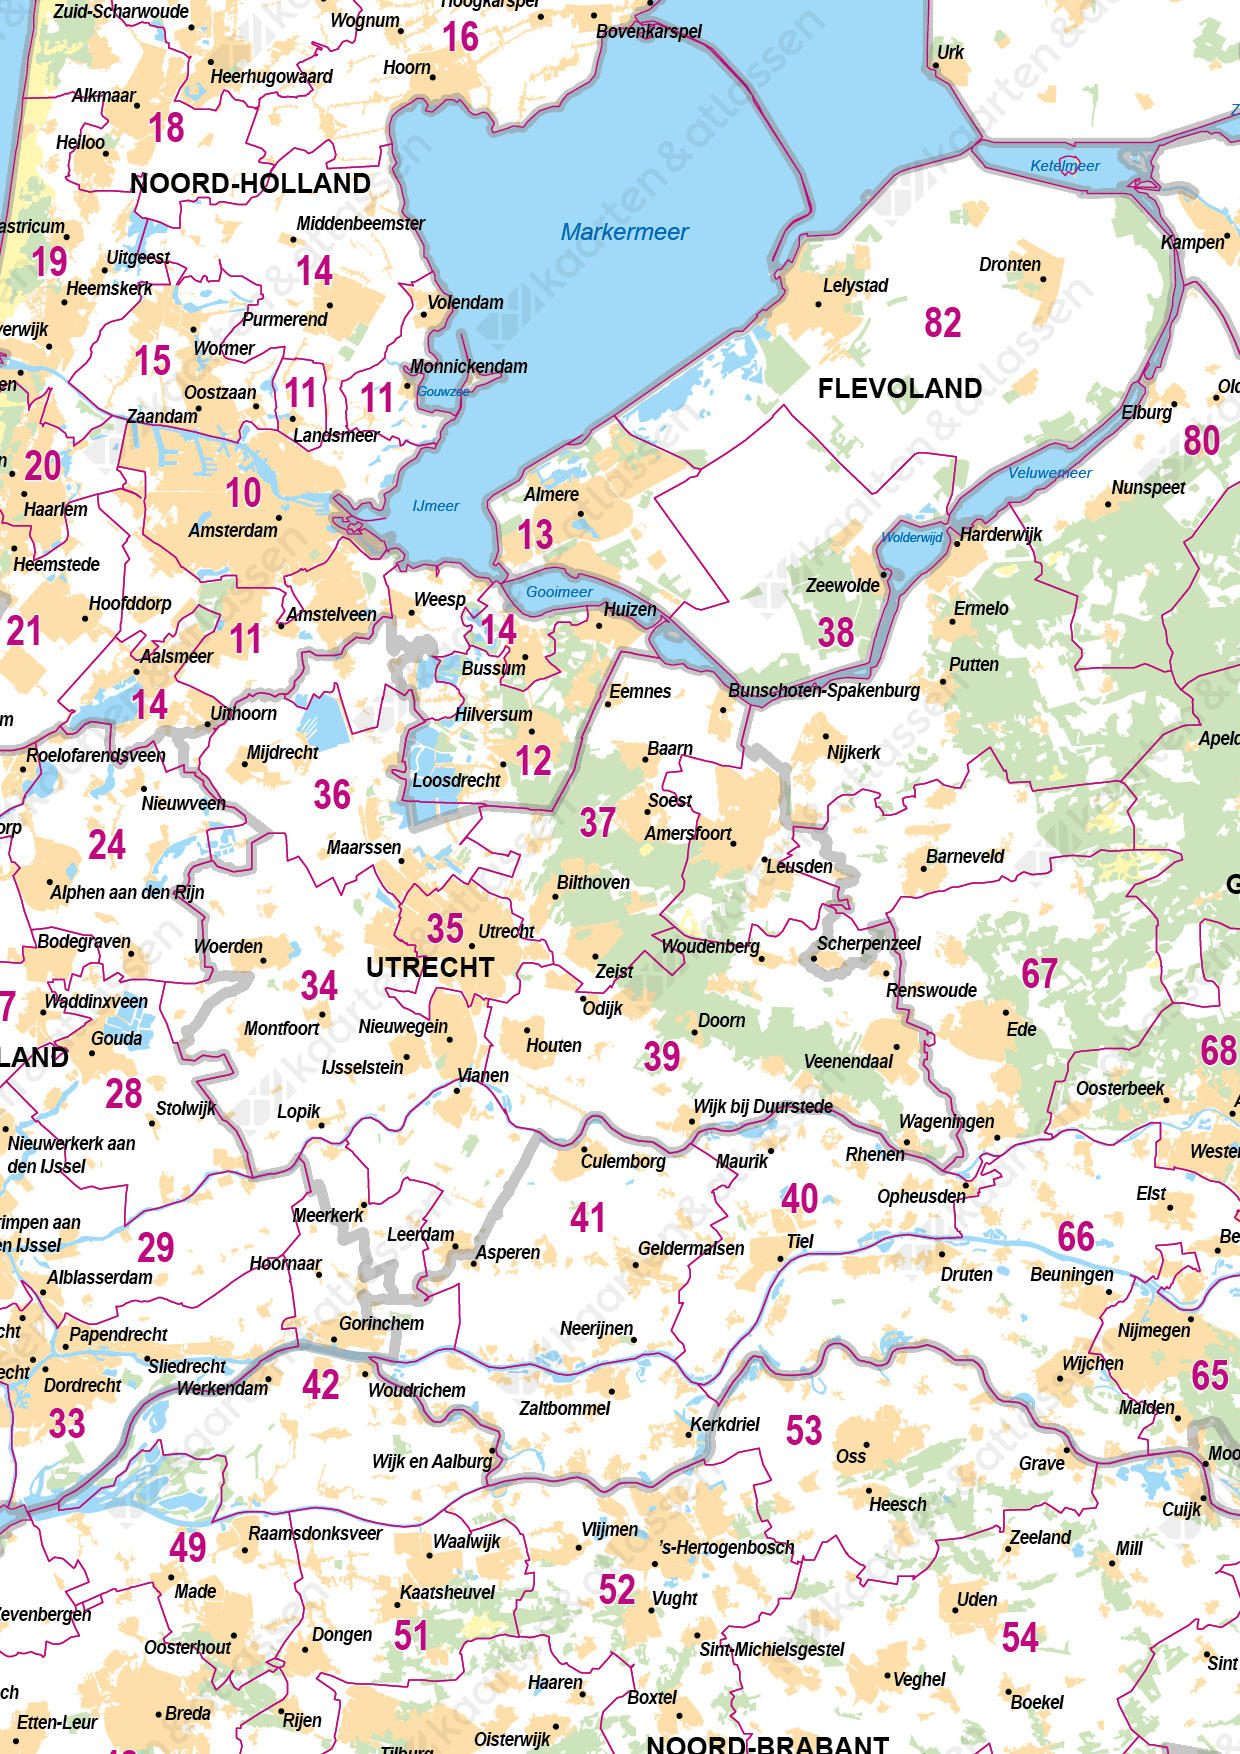 Digitale 2-cijferige Postcodekaart Nederland